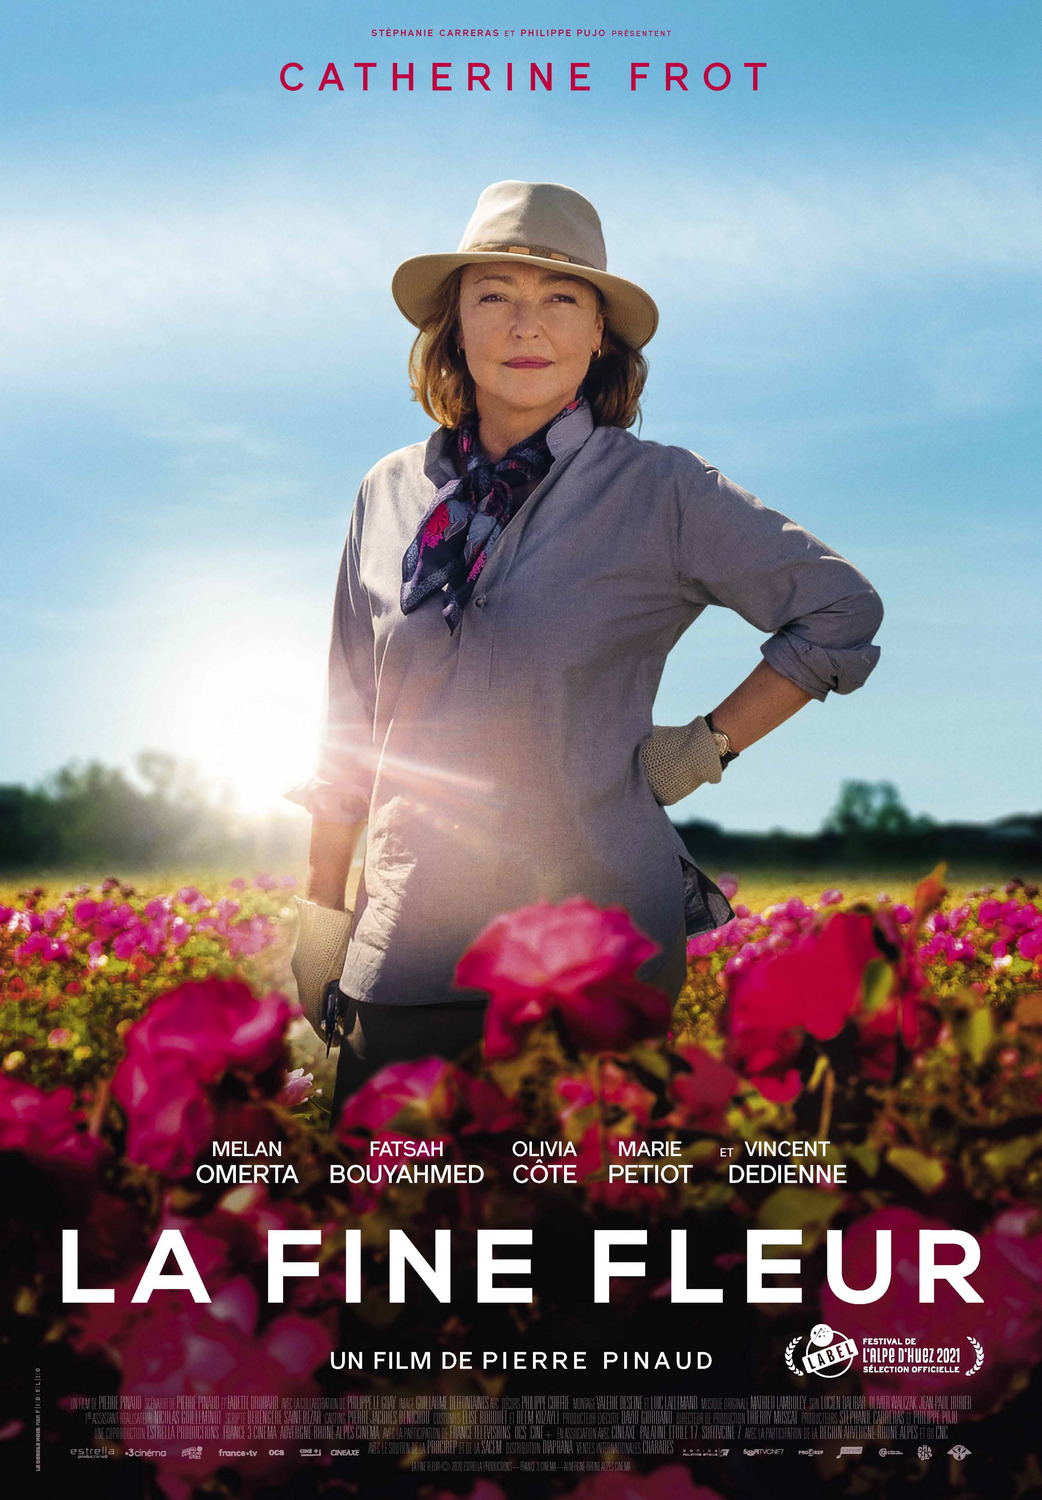 Extra Large Movie Poster Image for La fine fleur (#1 of 2)